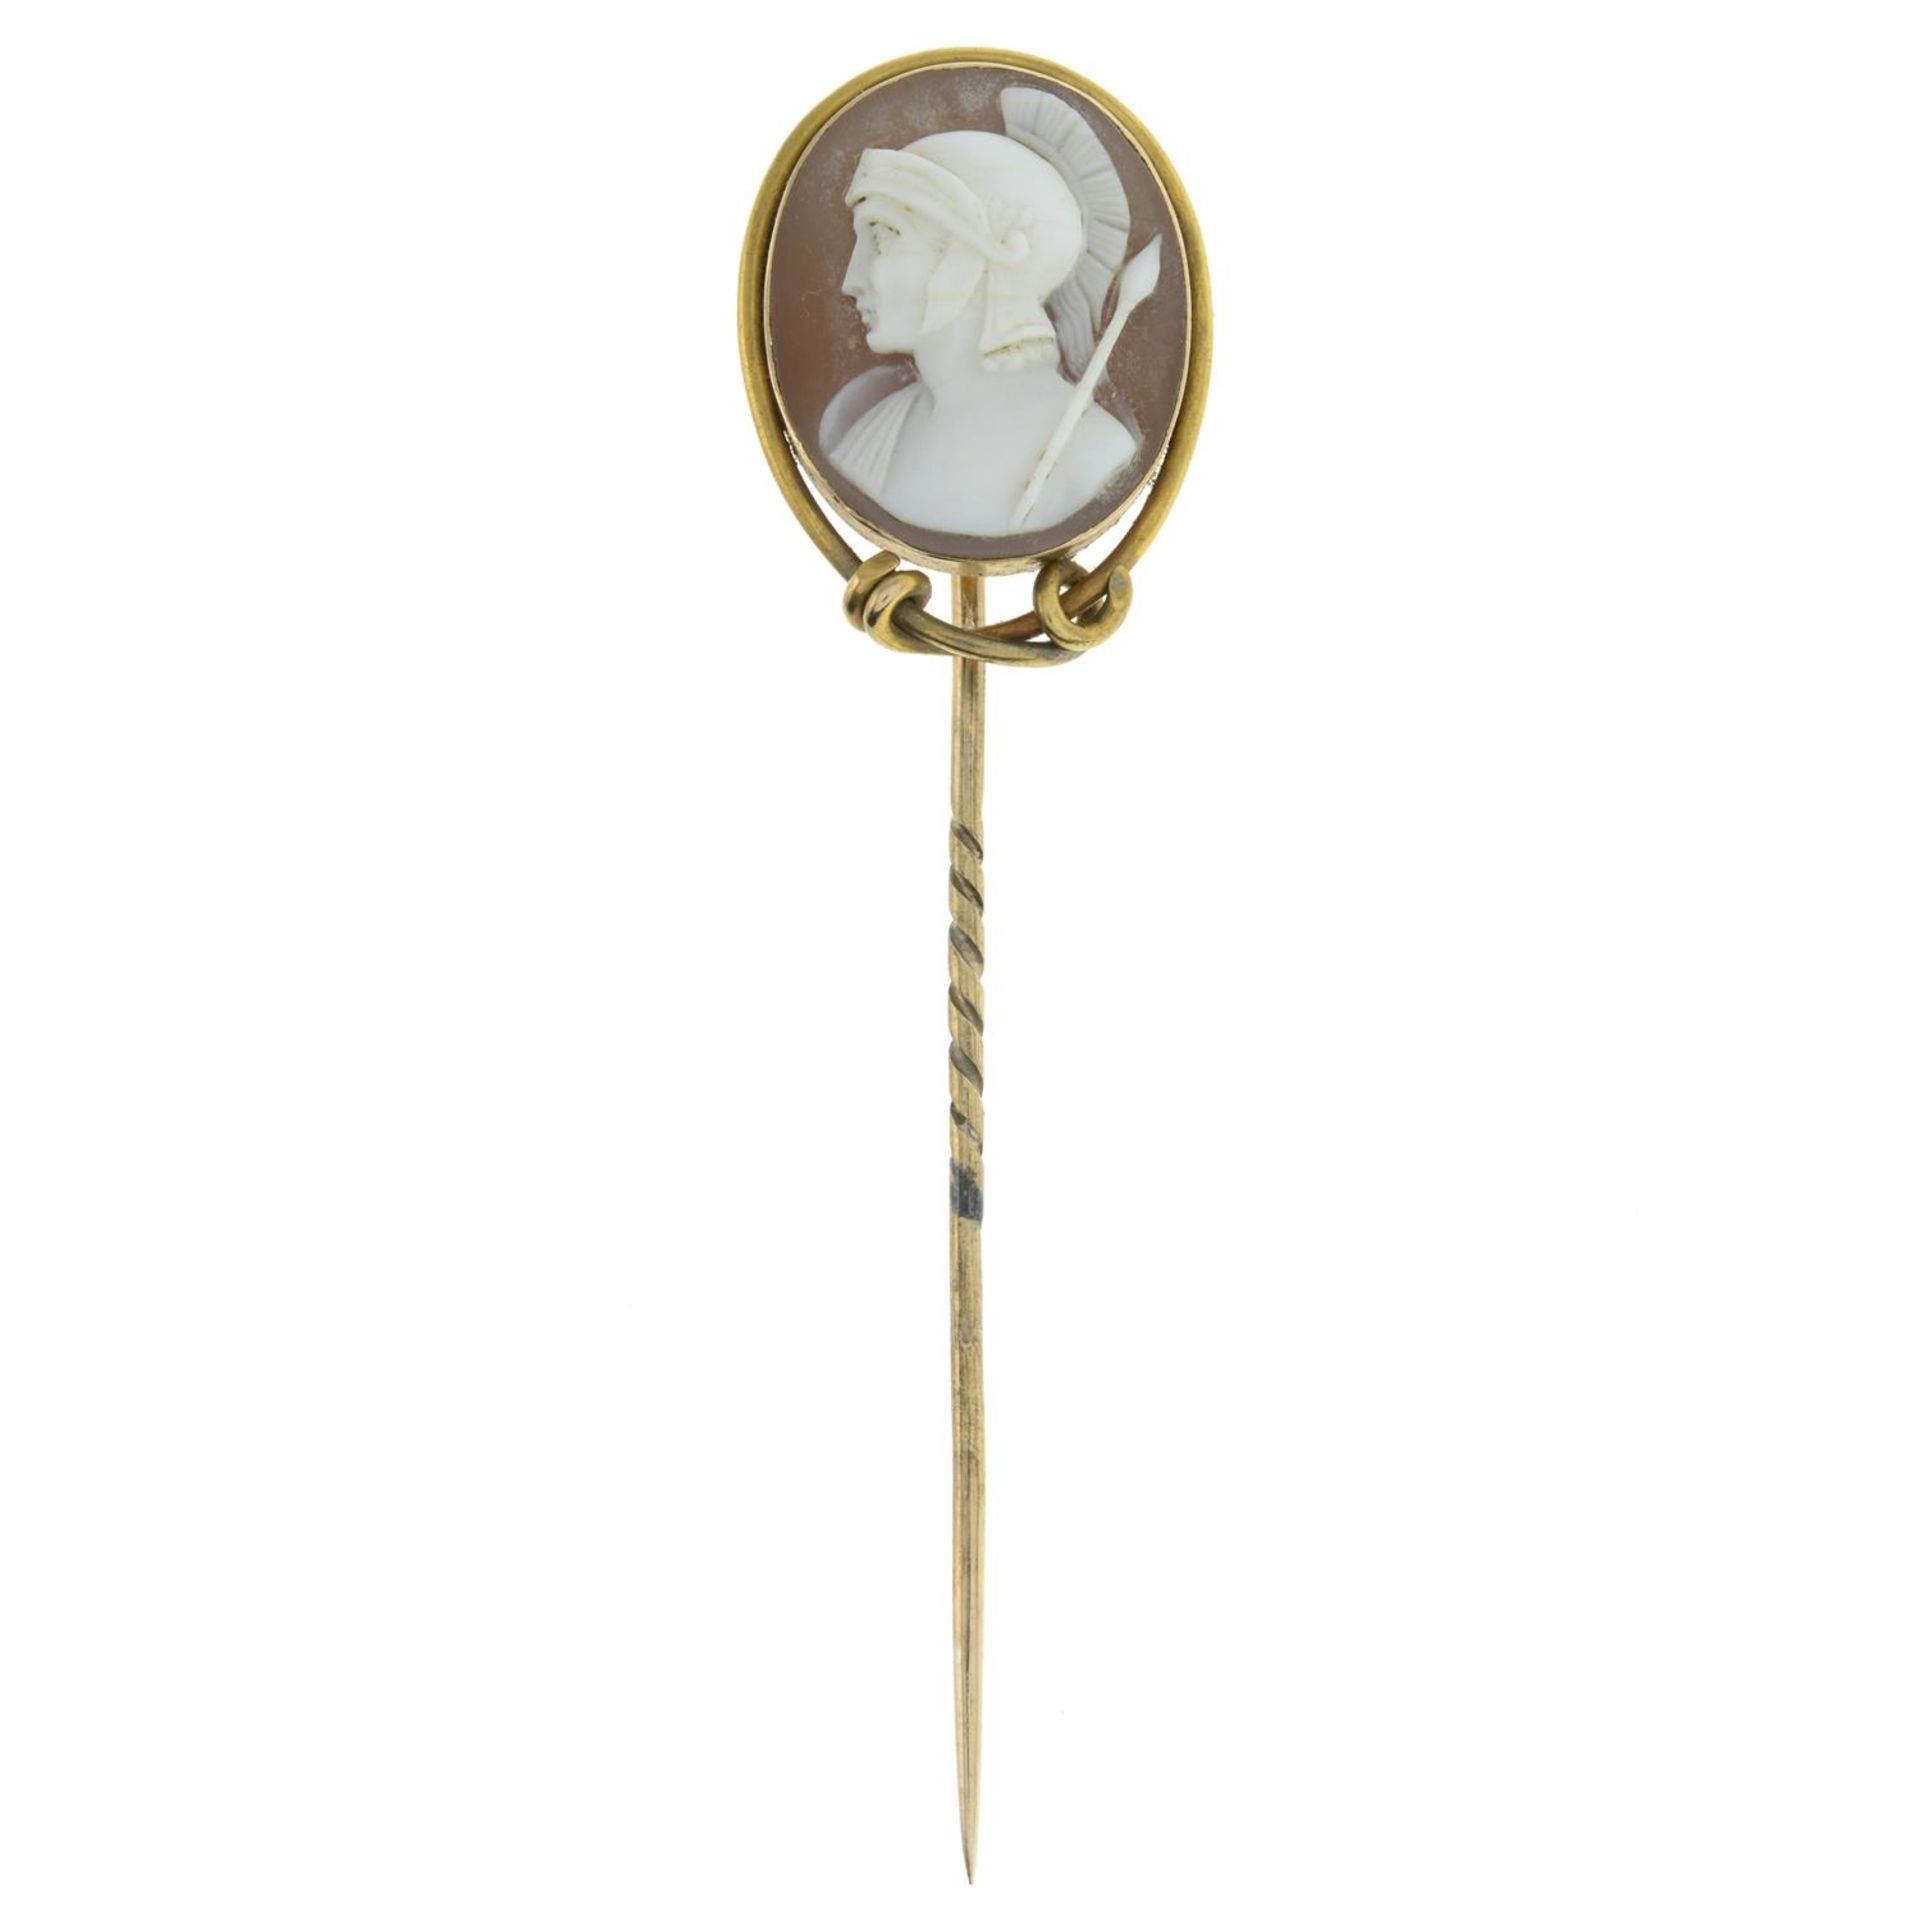 Late 19th century shell cameo stickpin